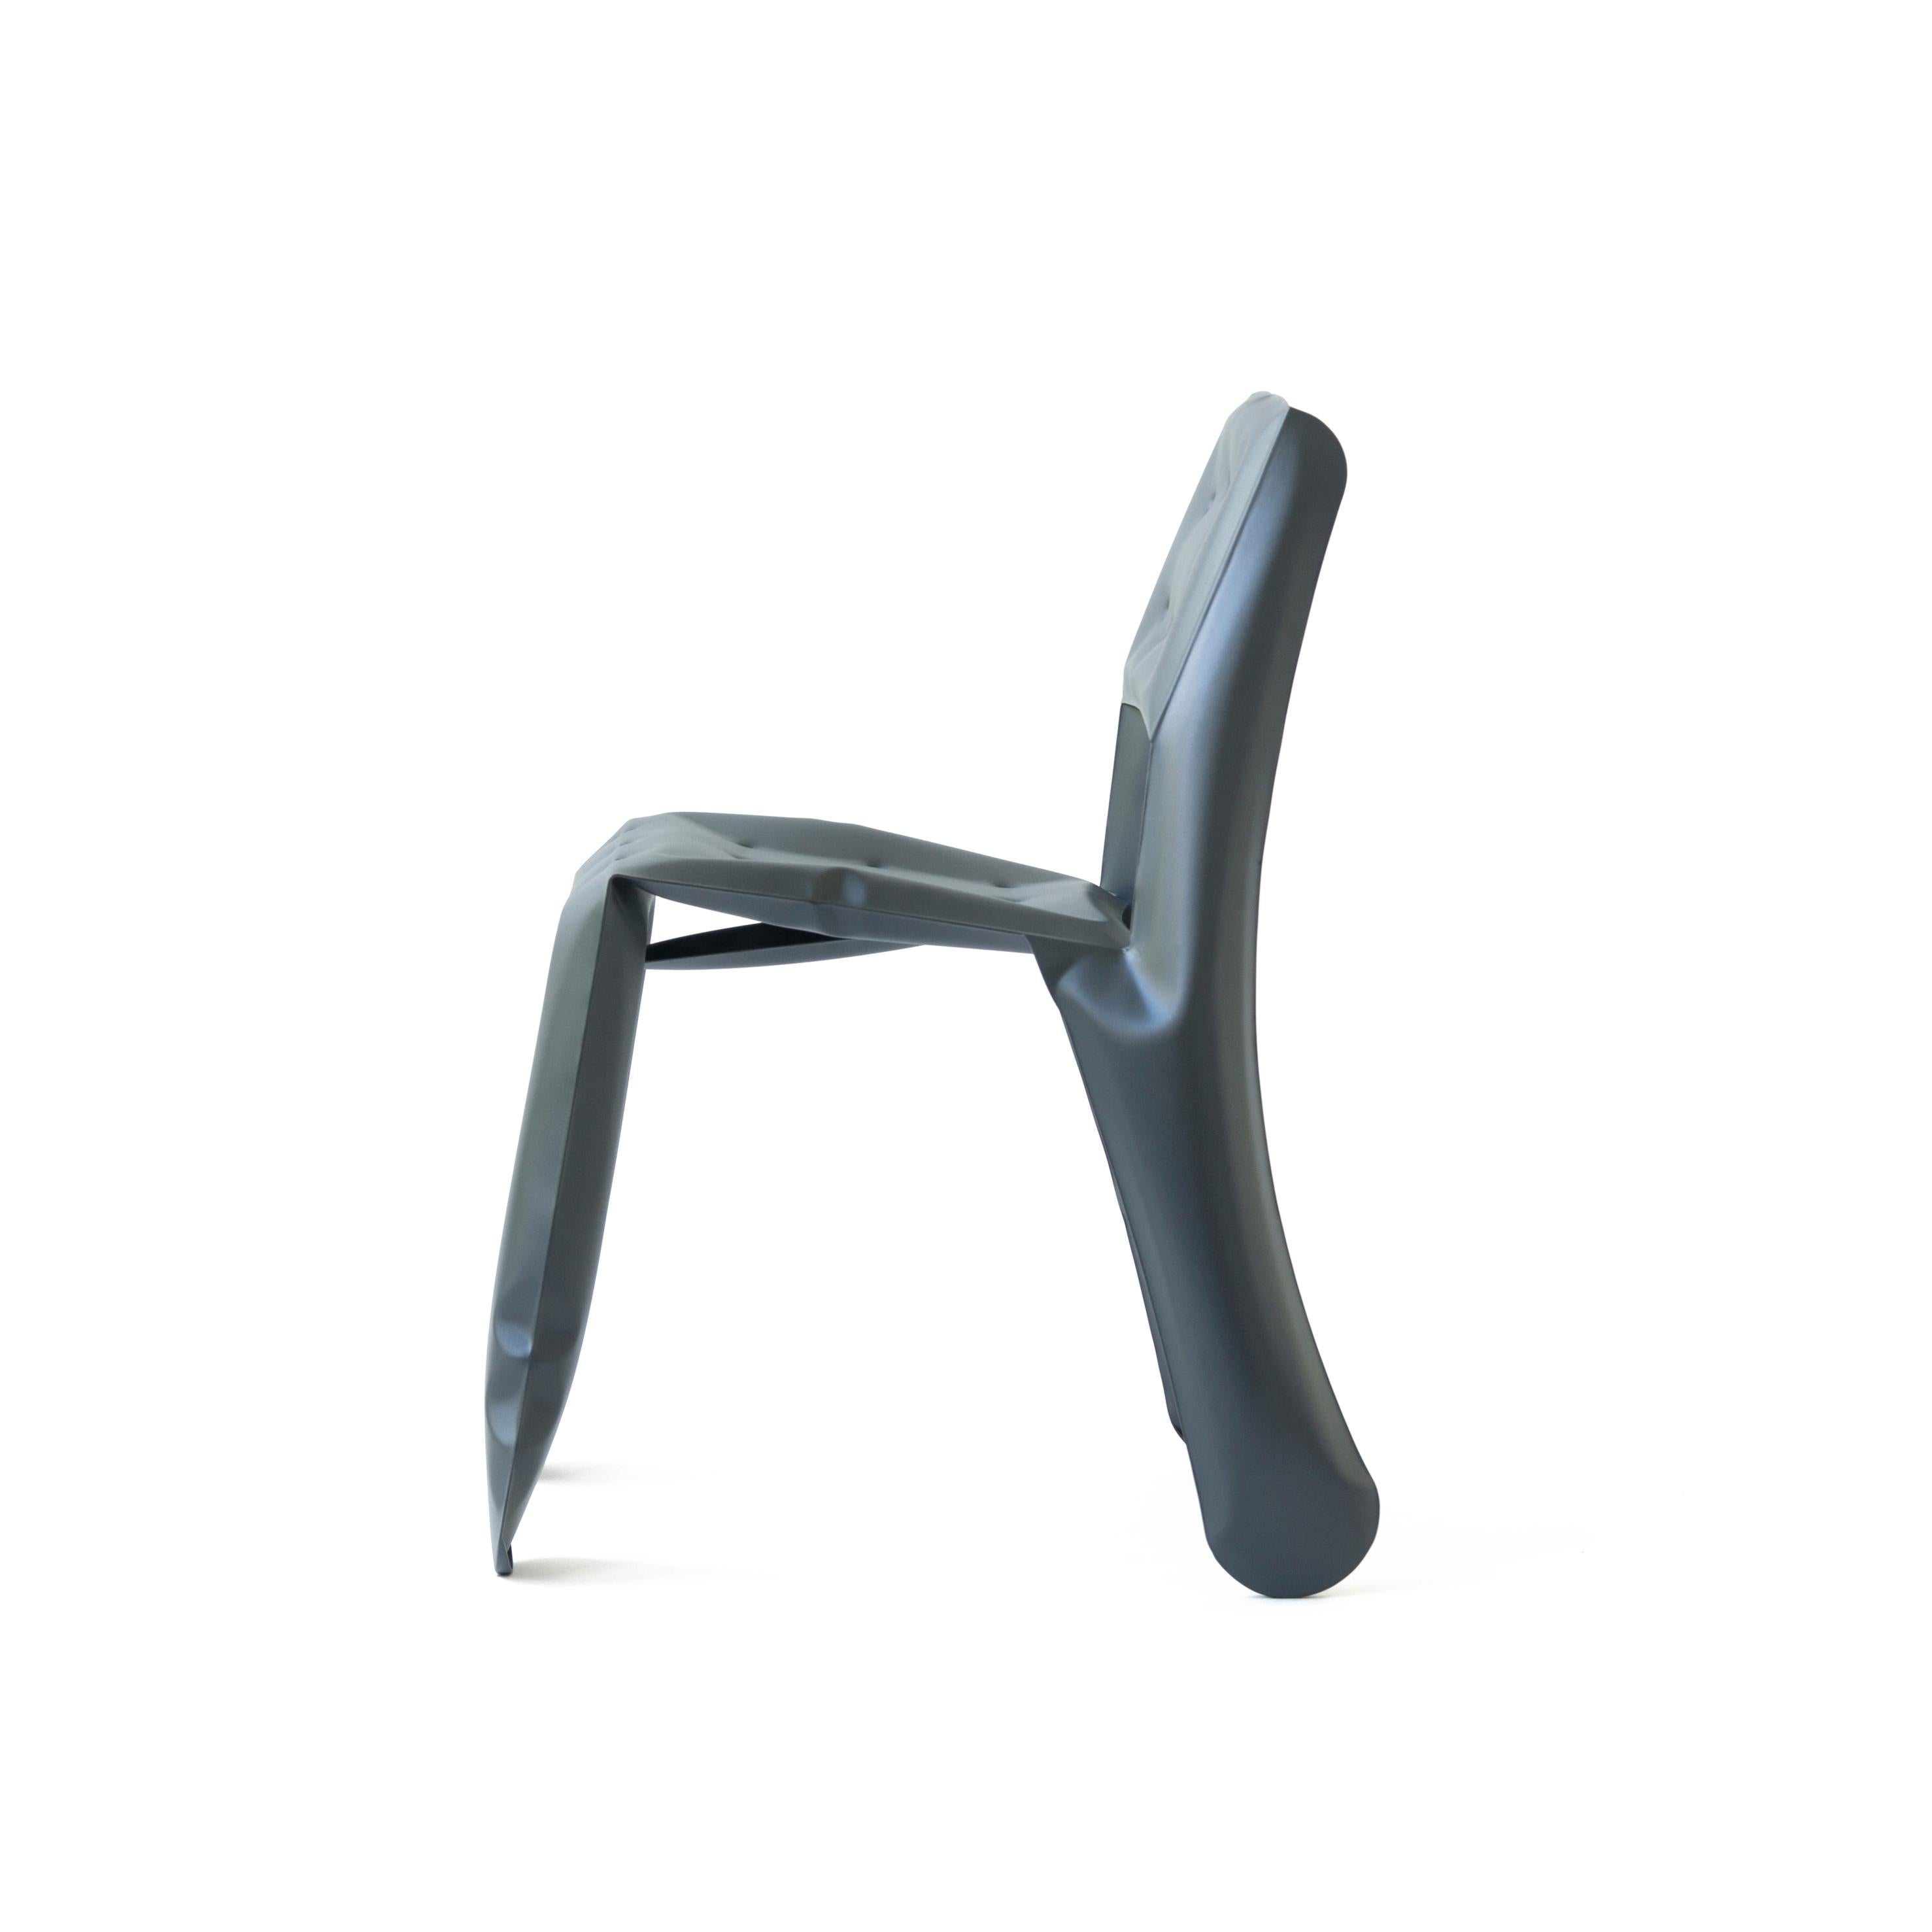 Polish Graphite Aluminum Chippensteel 0.5 Sculptural Chair by Zieta For Sale